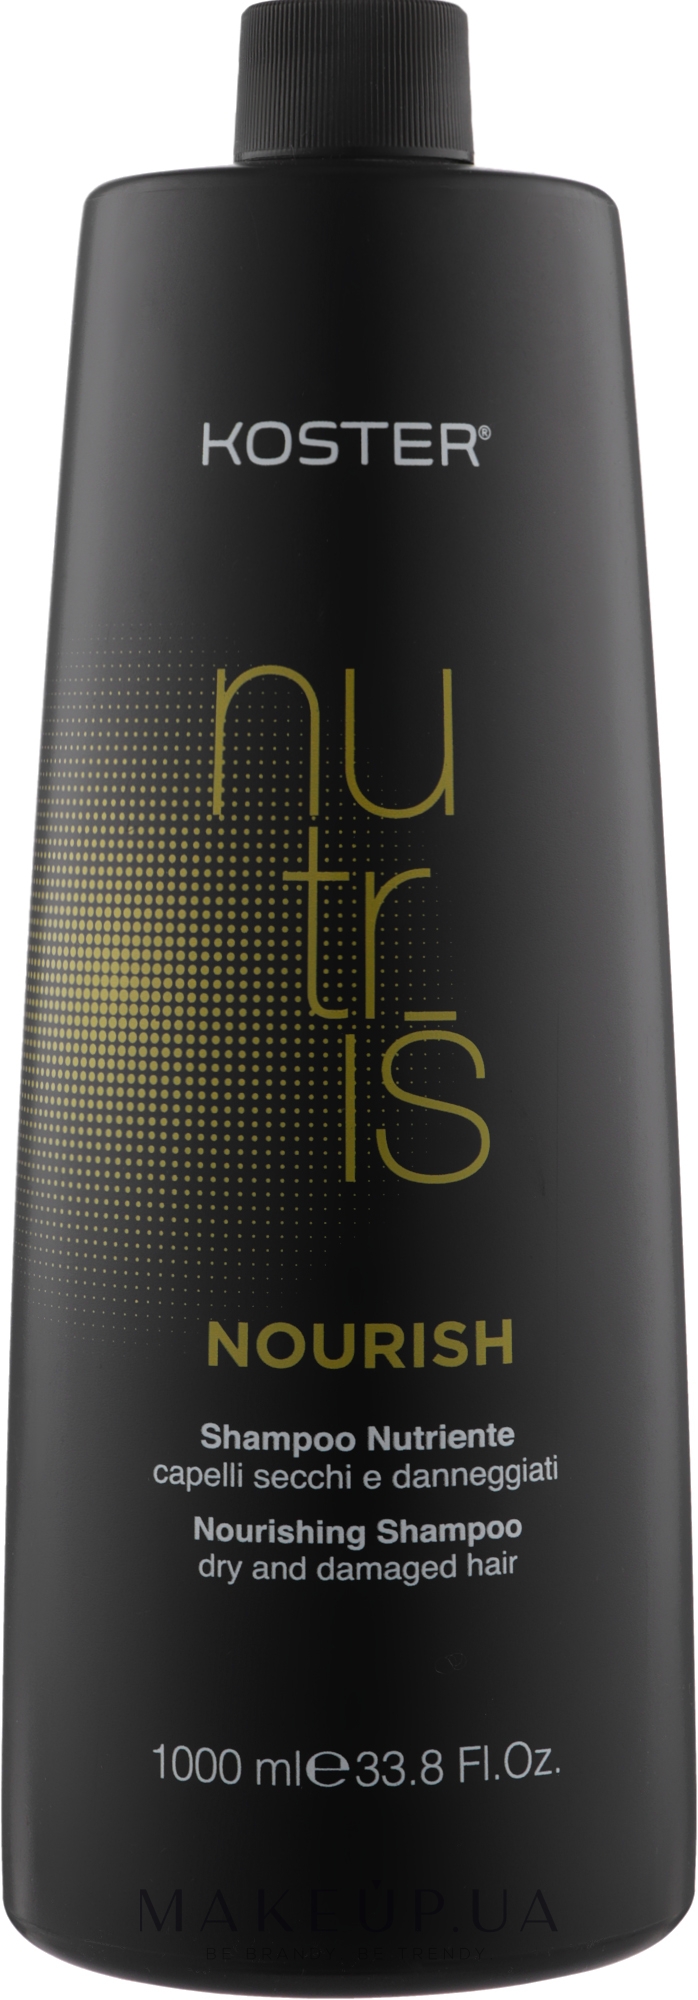 Шампунь для сухого й пошкодженого волосся - Koster Nutris Nourish Shampoo — фото 1000ml